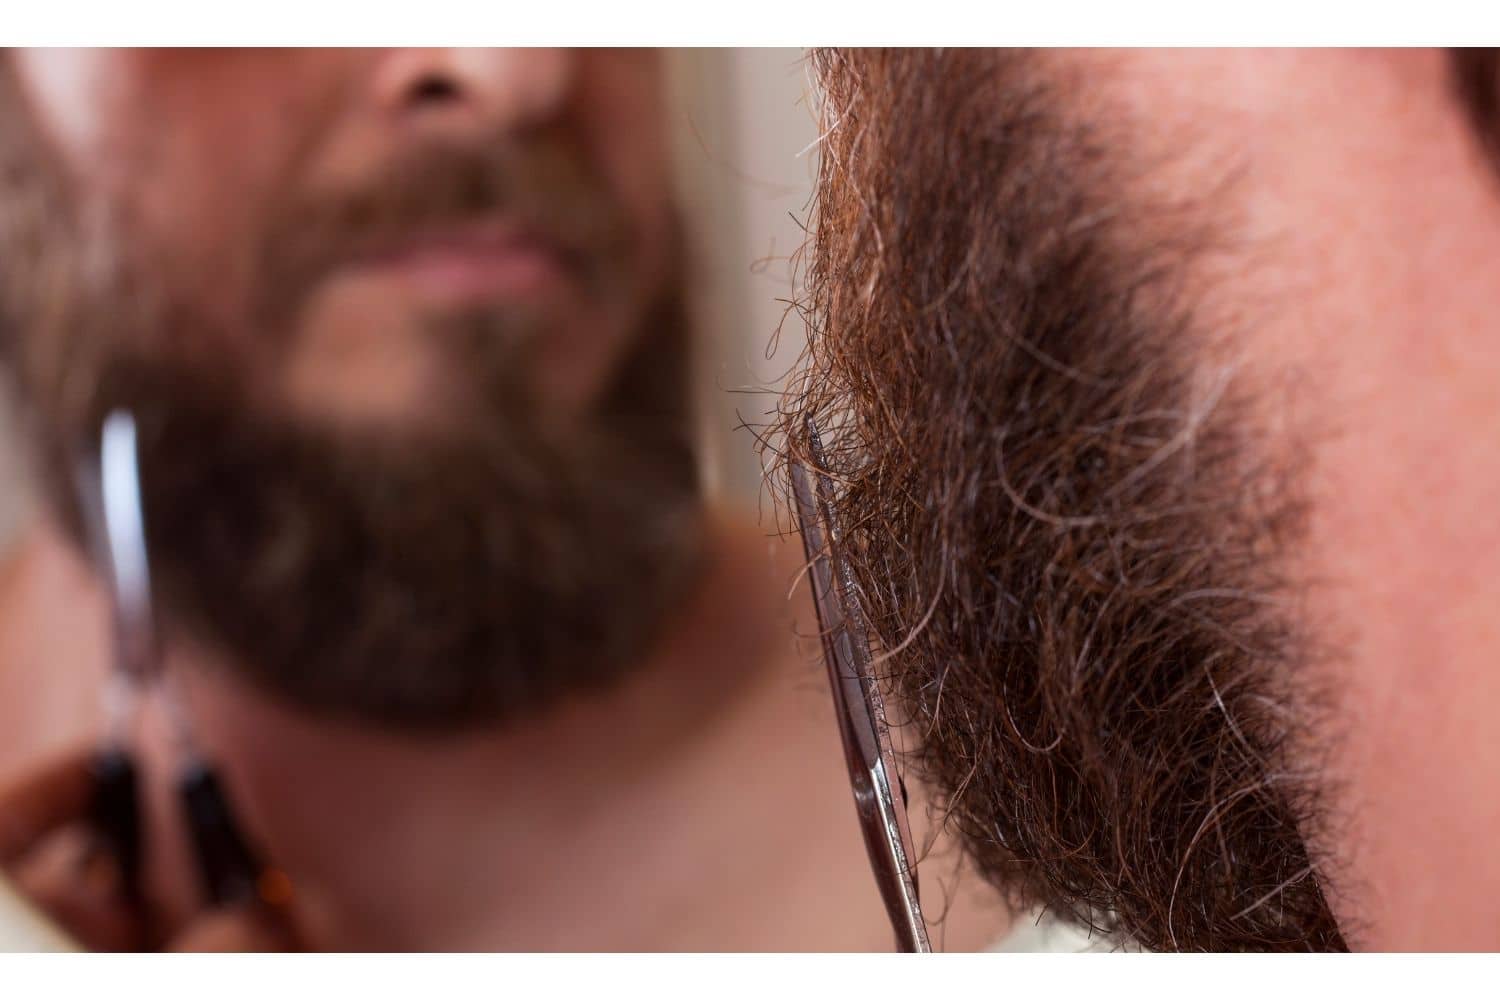 trim a beard with scissors